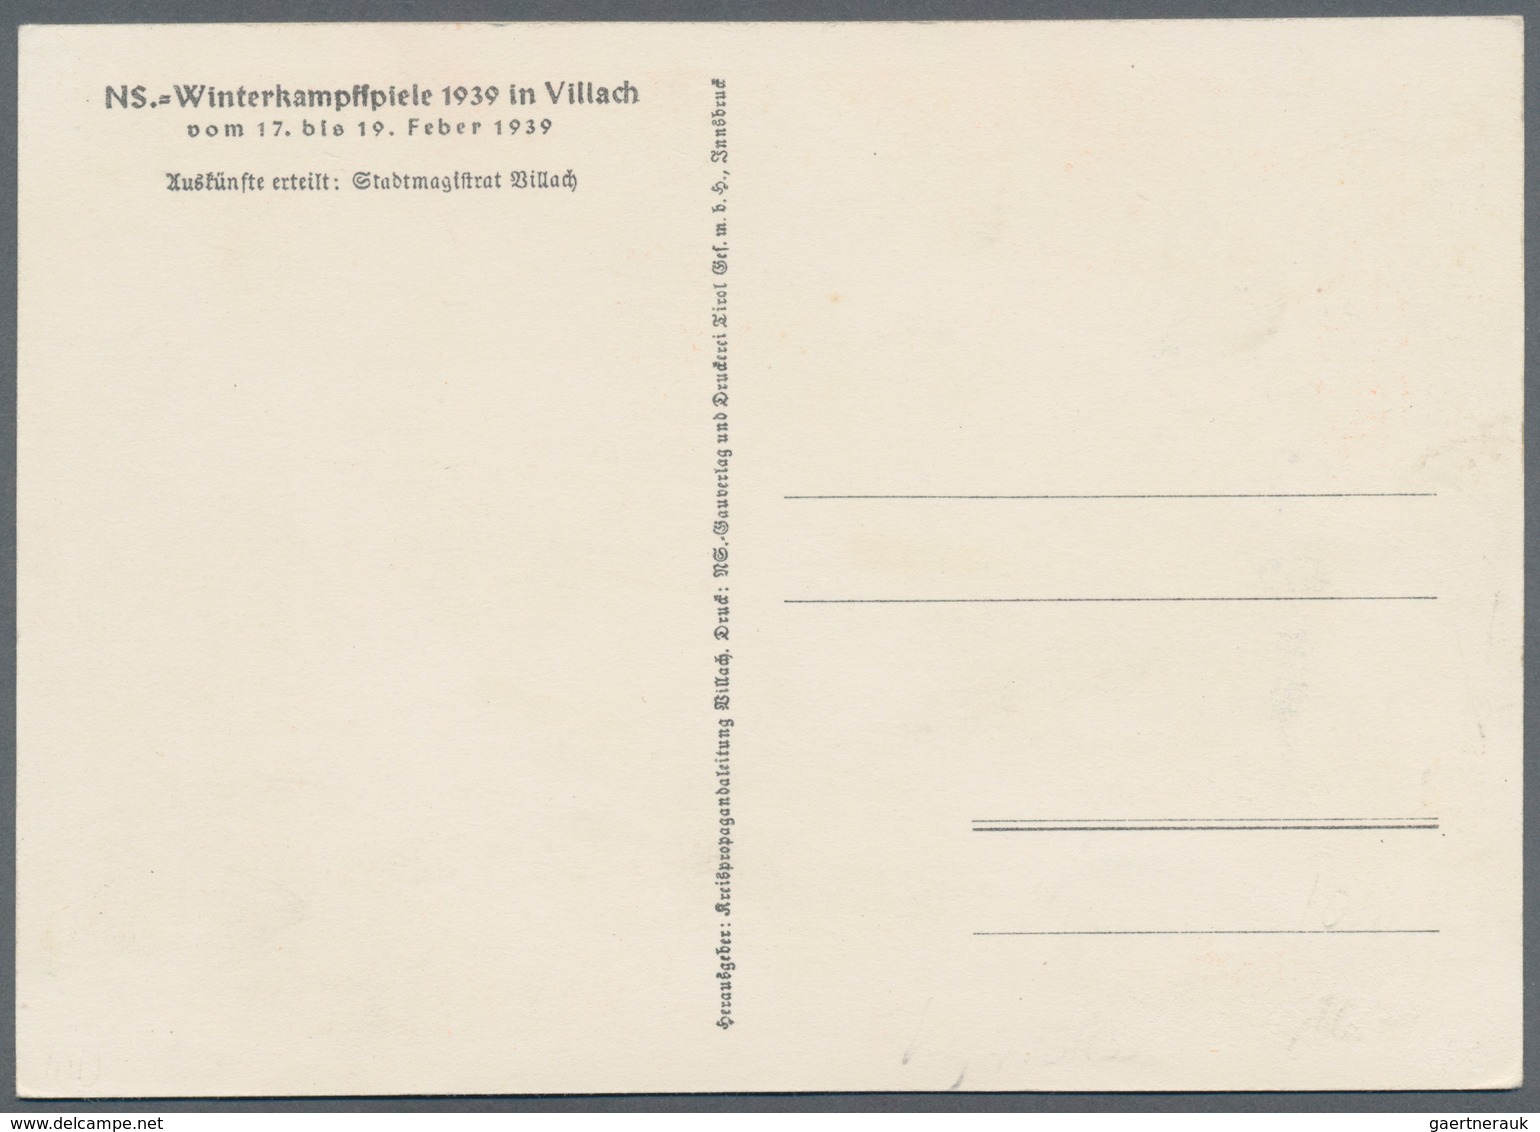 Ansichtskarten: Propaganda: 1939. N.S. Winterkampfspiele 17.-19. Feb 1939, Villach, Kärnten. Selten - Political Parties & Elections